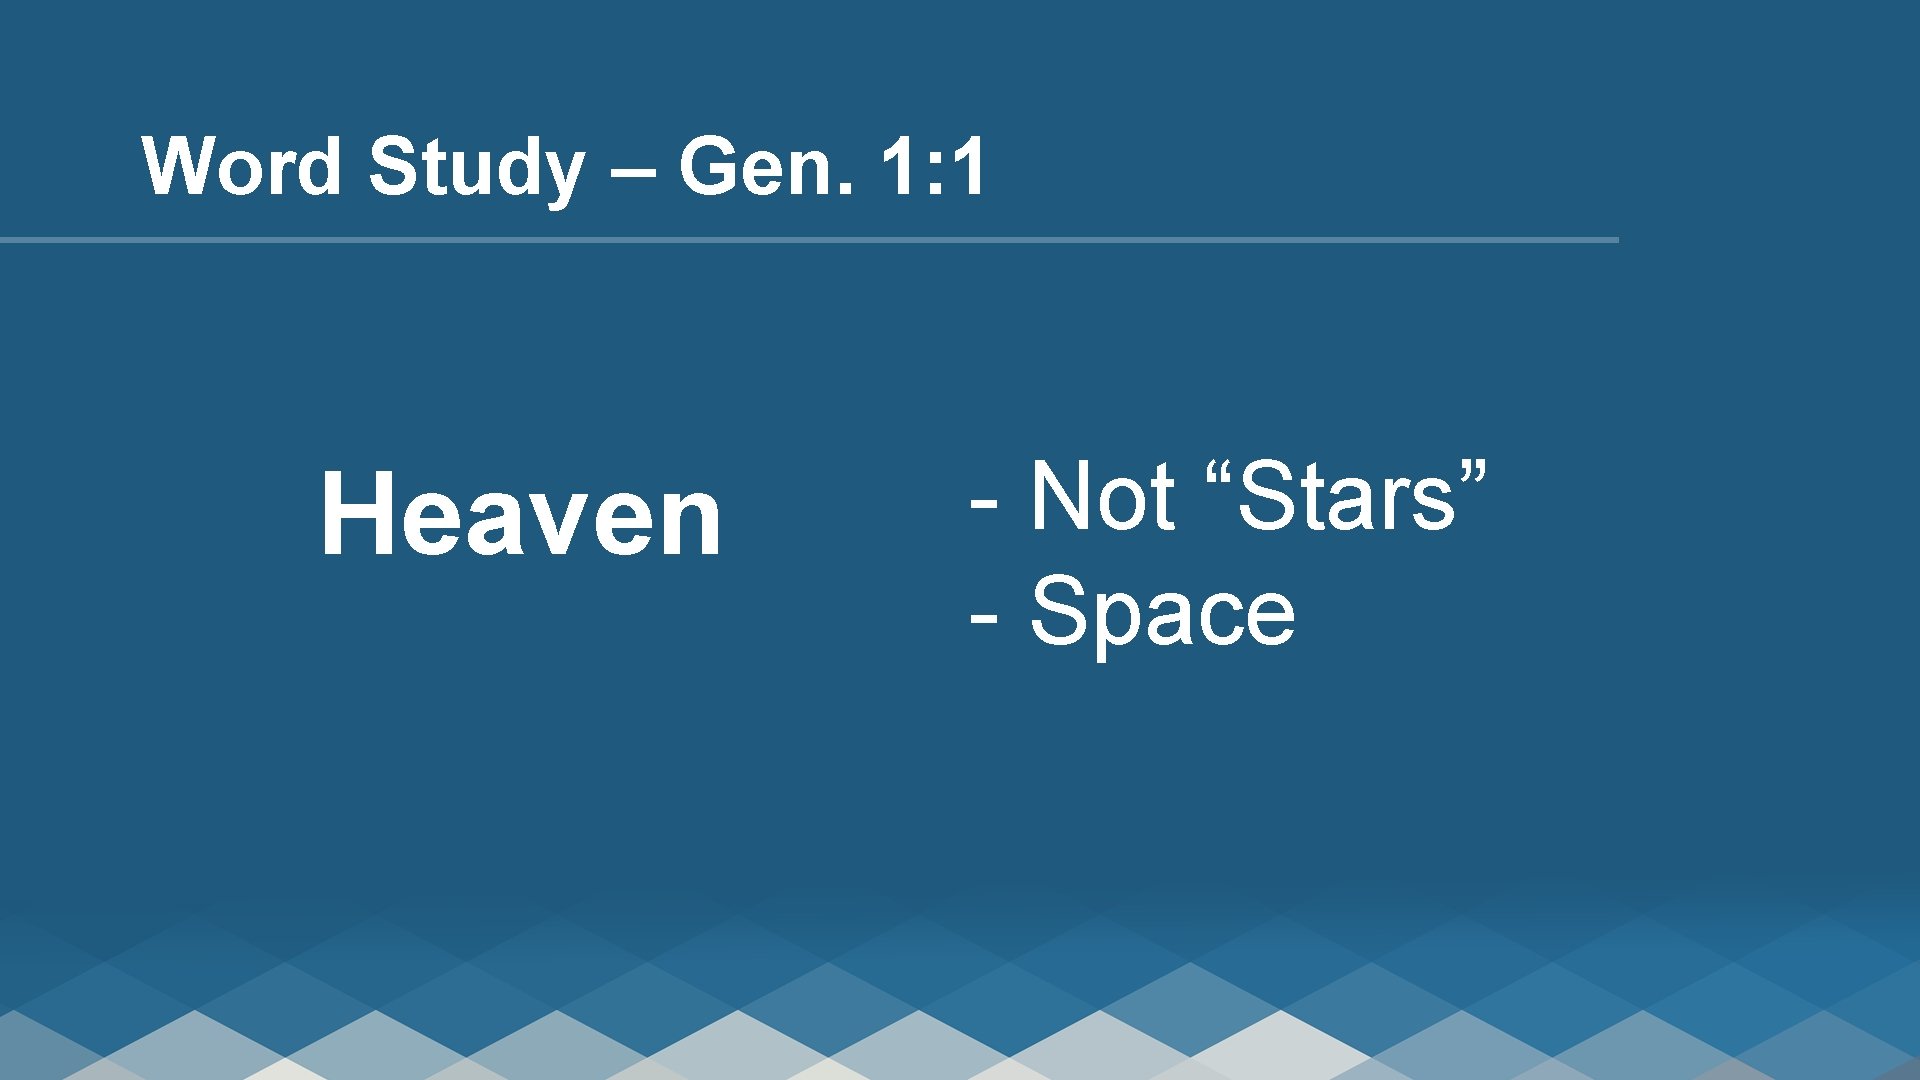 Word Study – Gen. 1: 1 Heaven - Not “Stars” - Space 